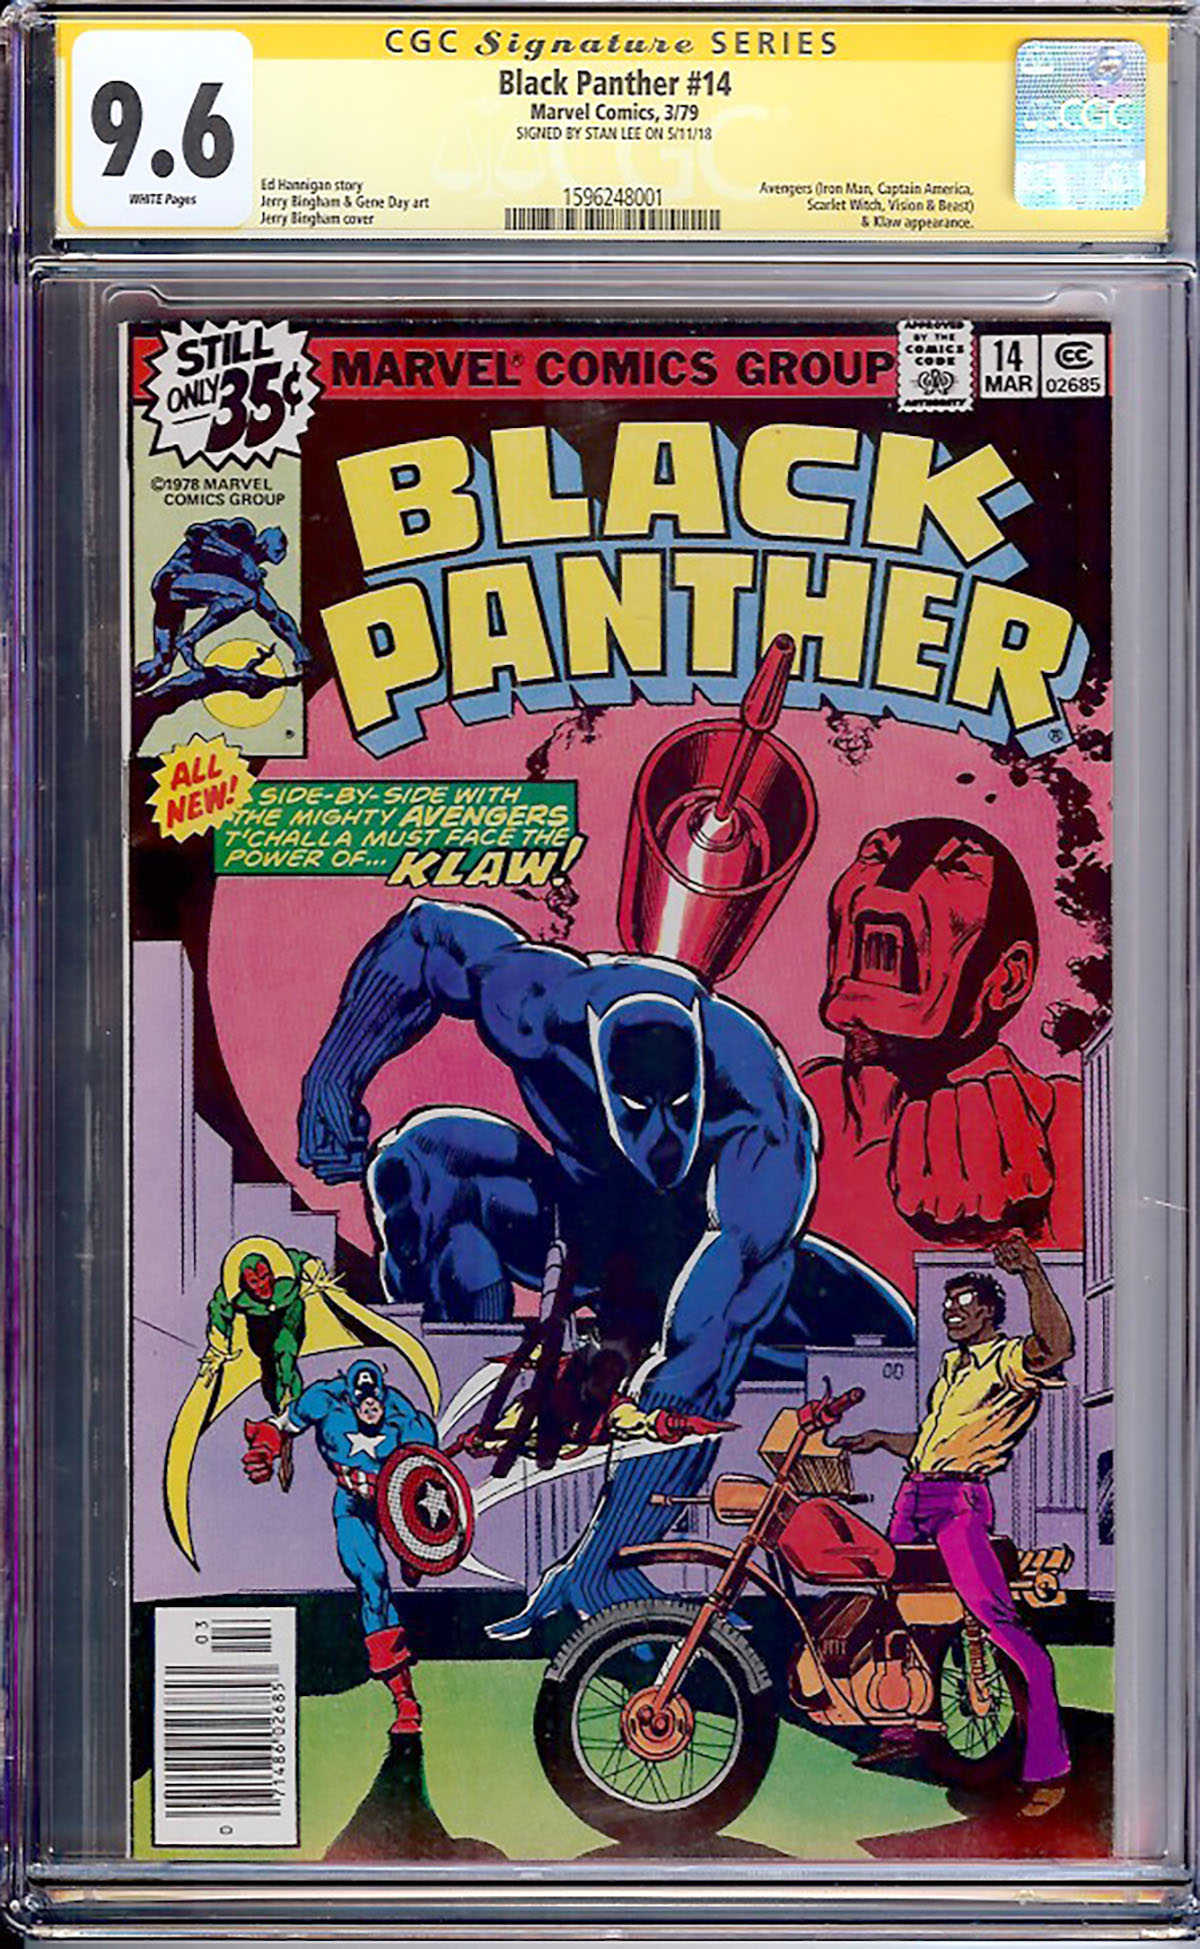 Black Panther #14 CGC 9.6 w CGC Signature SERIES